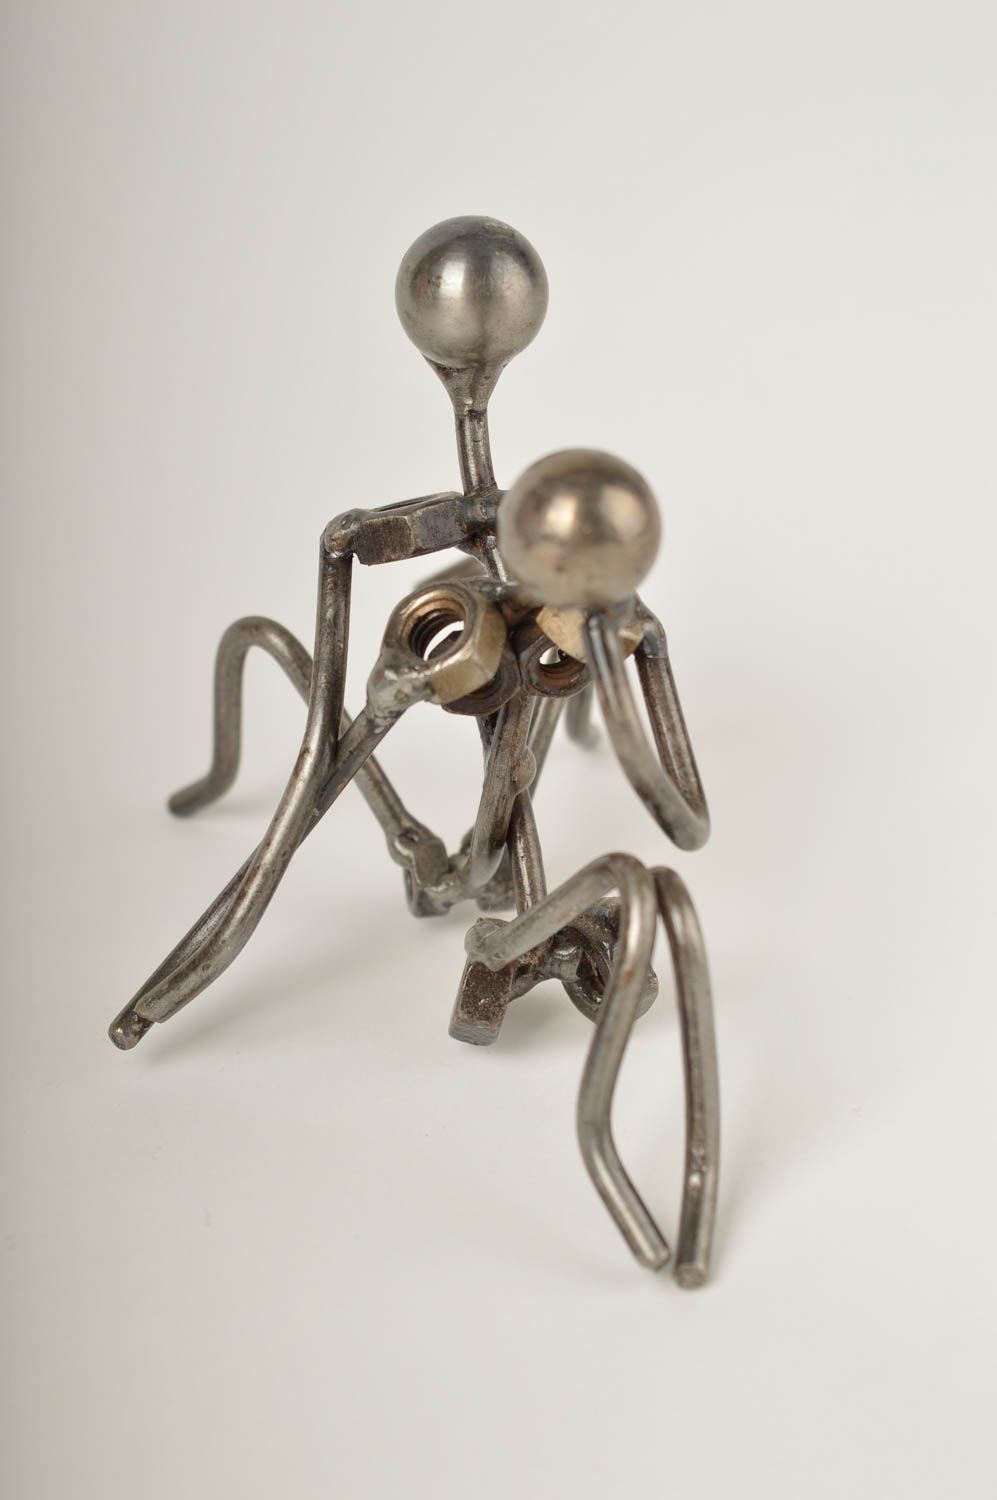 Handmade miniature figurine metal decor figurines of people for decorative use photo 4